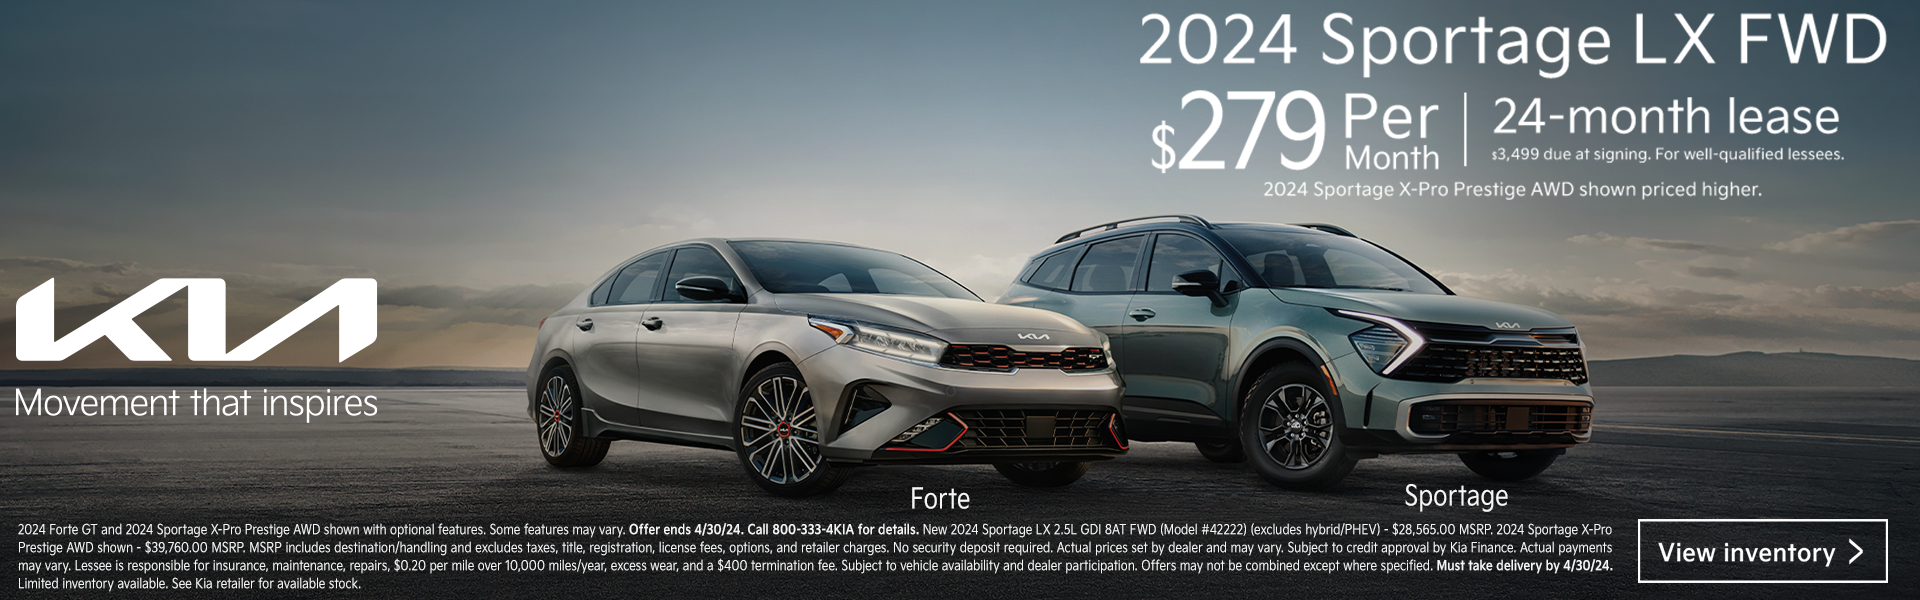 2024 Sportage LX FWD $279